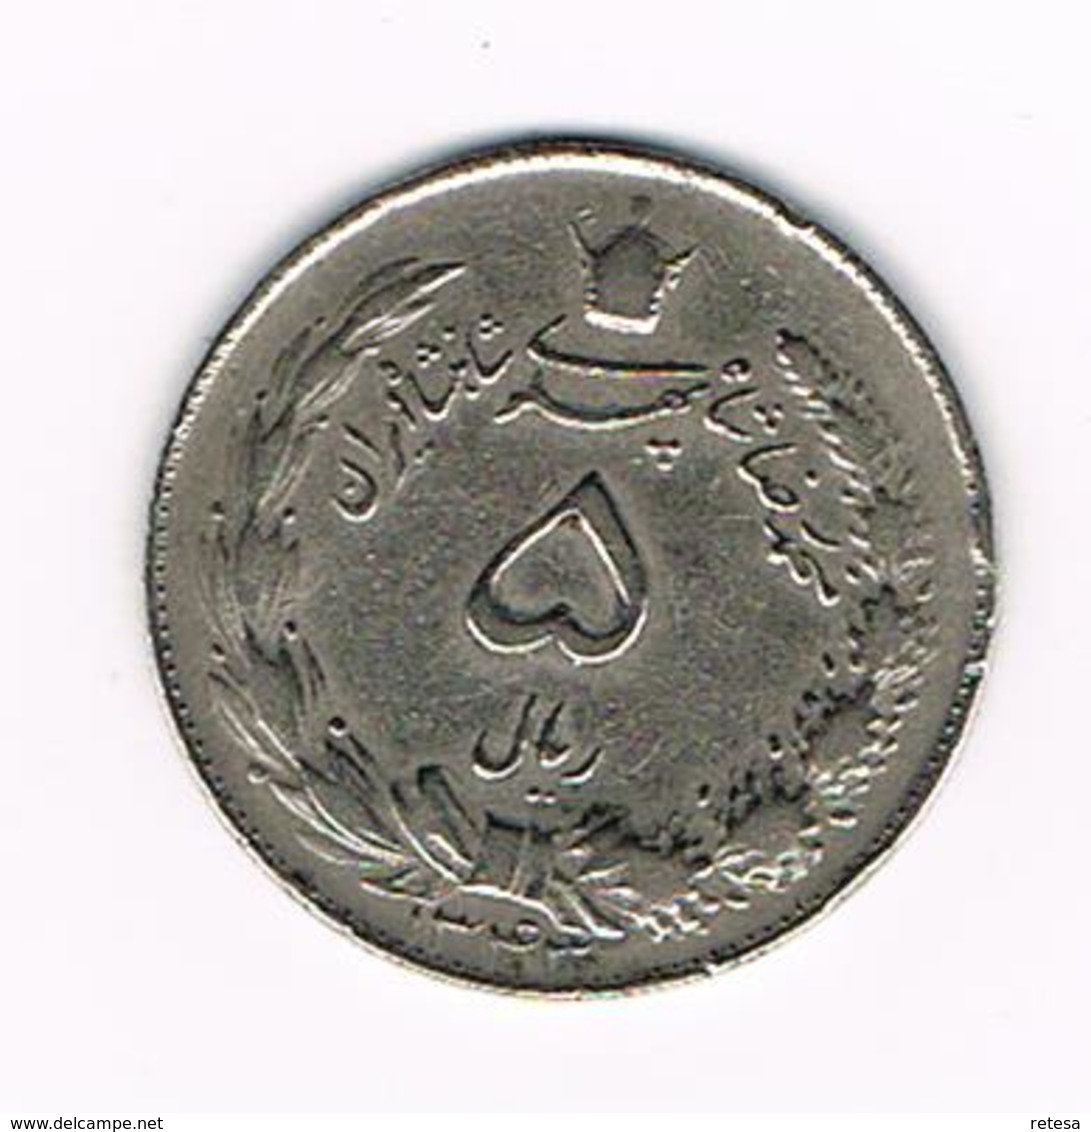 &  IRAN  5 RIALS  1343 - Iran